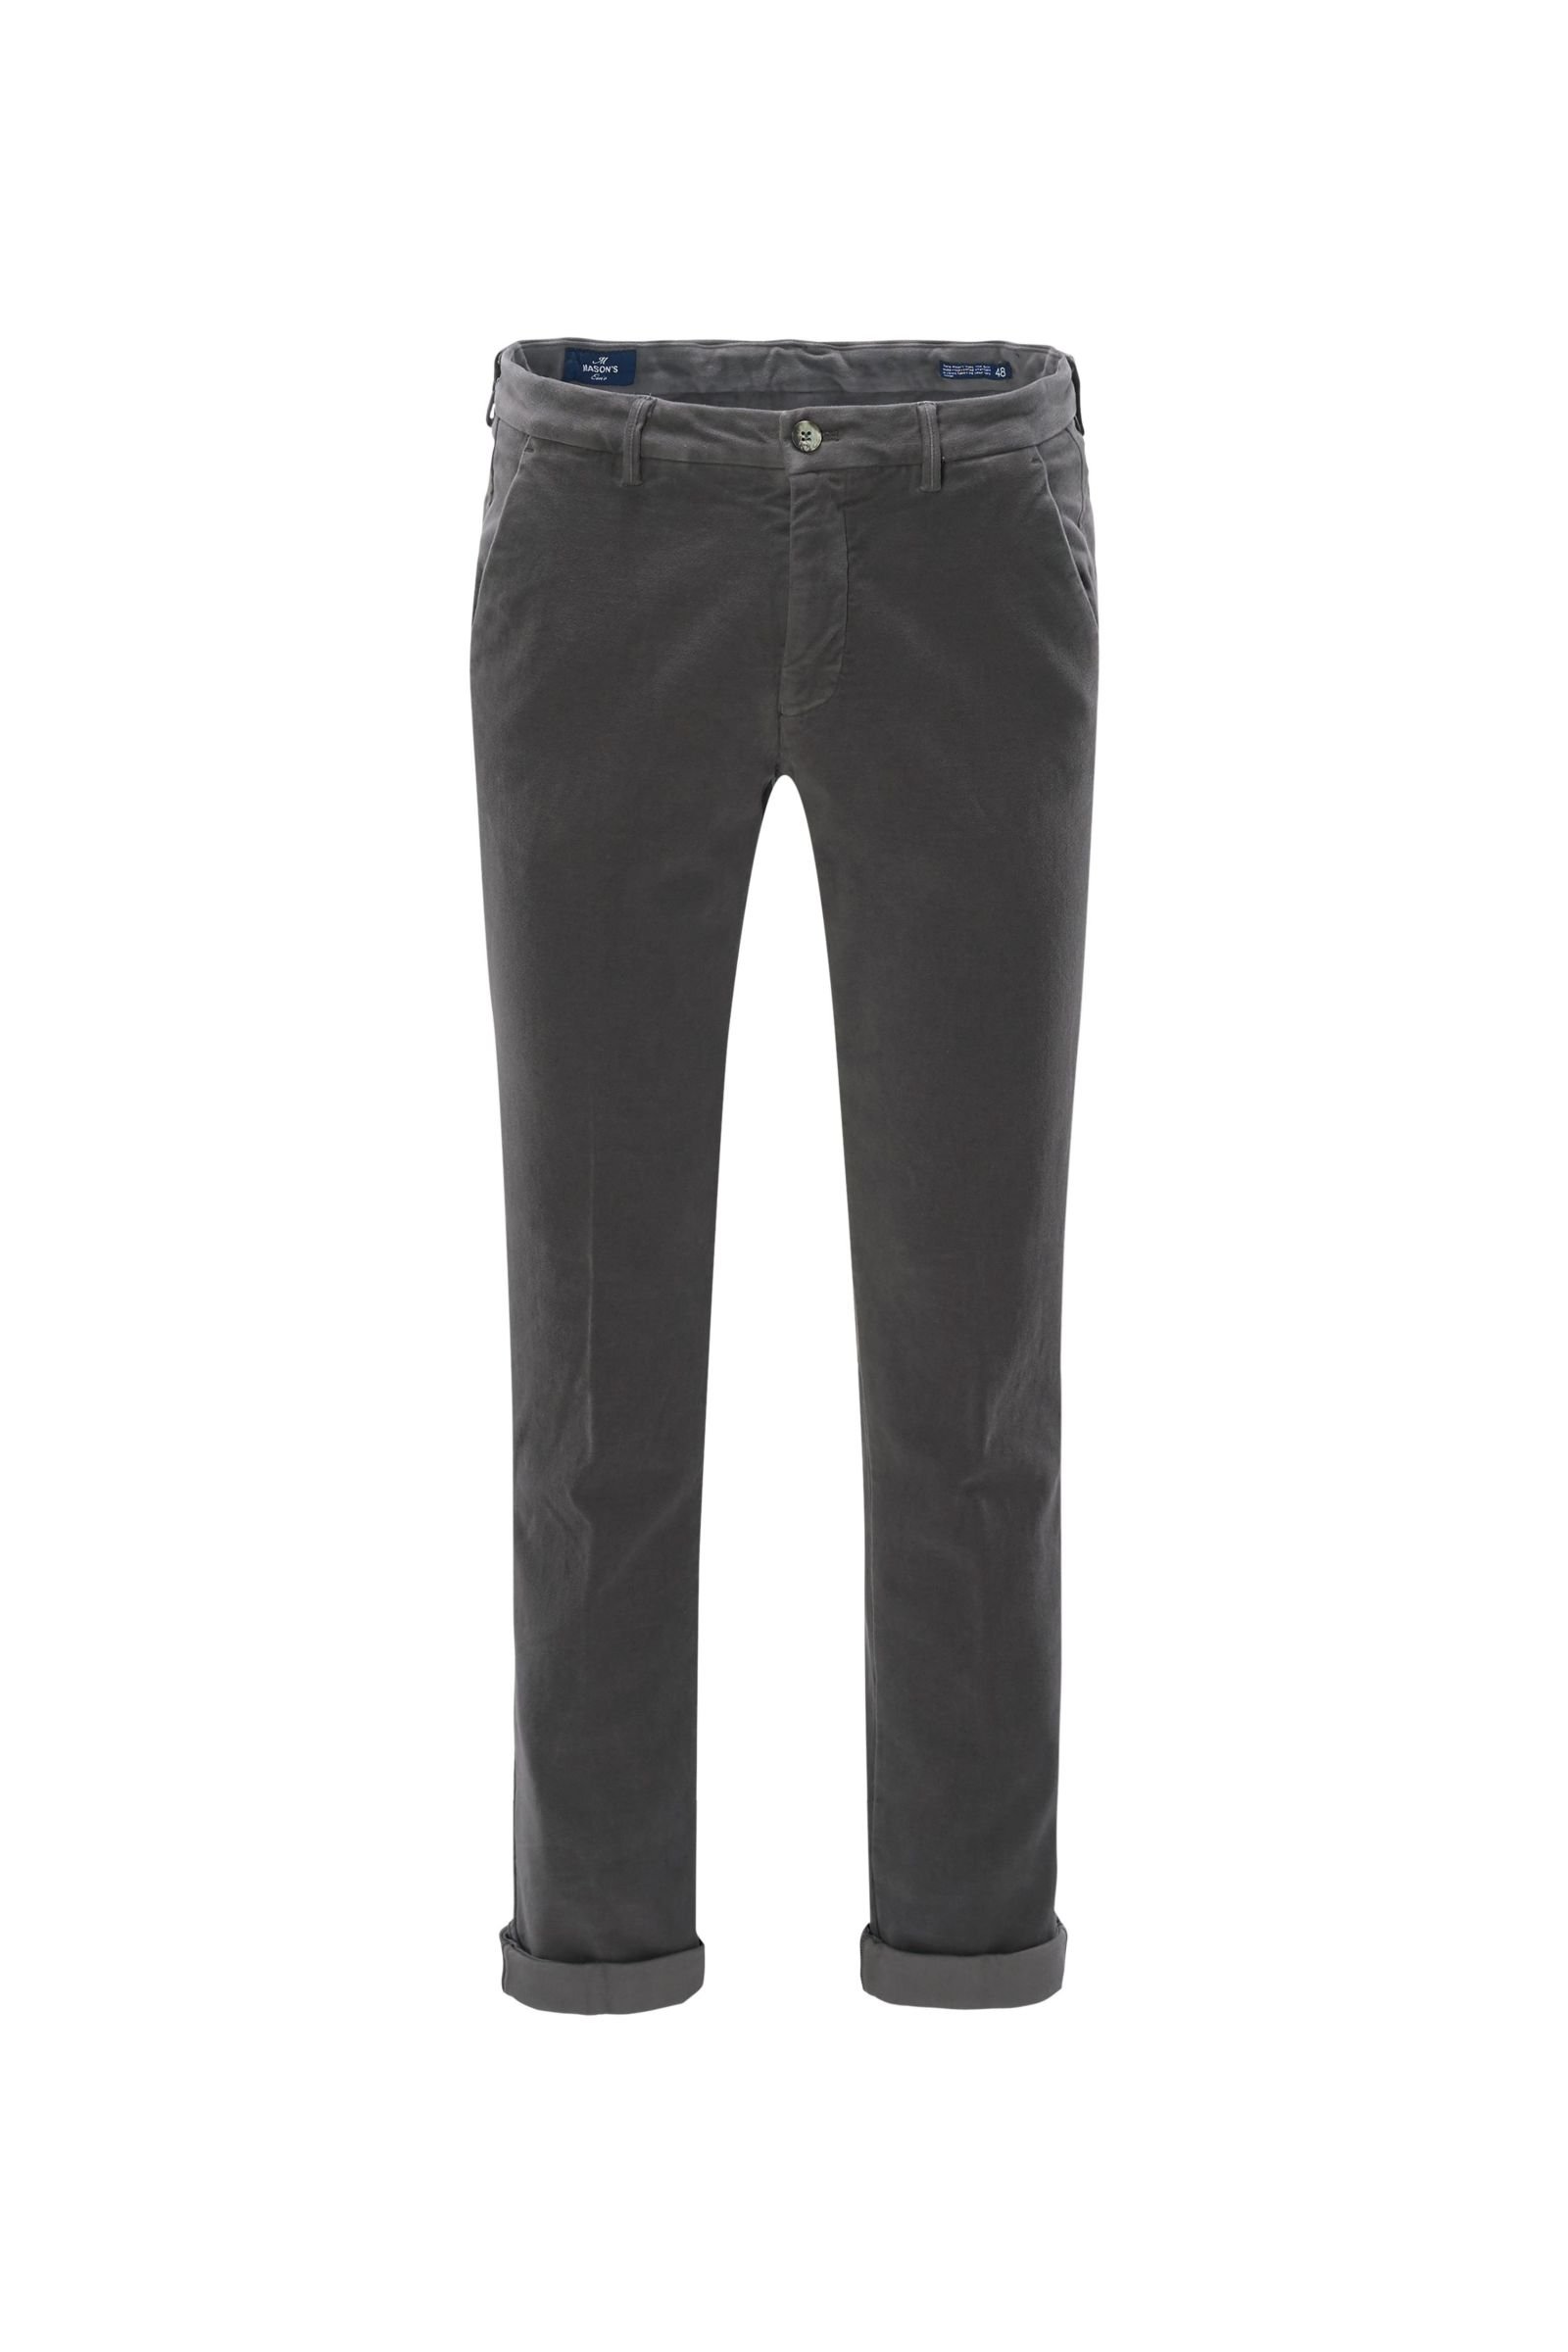 Fustian trousers 'Torino' dark grey